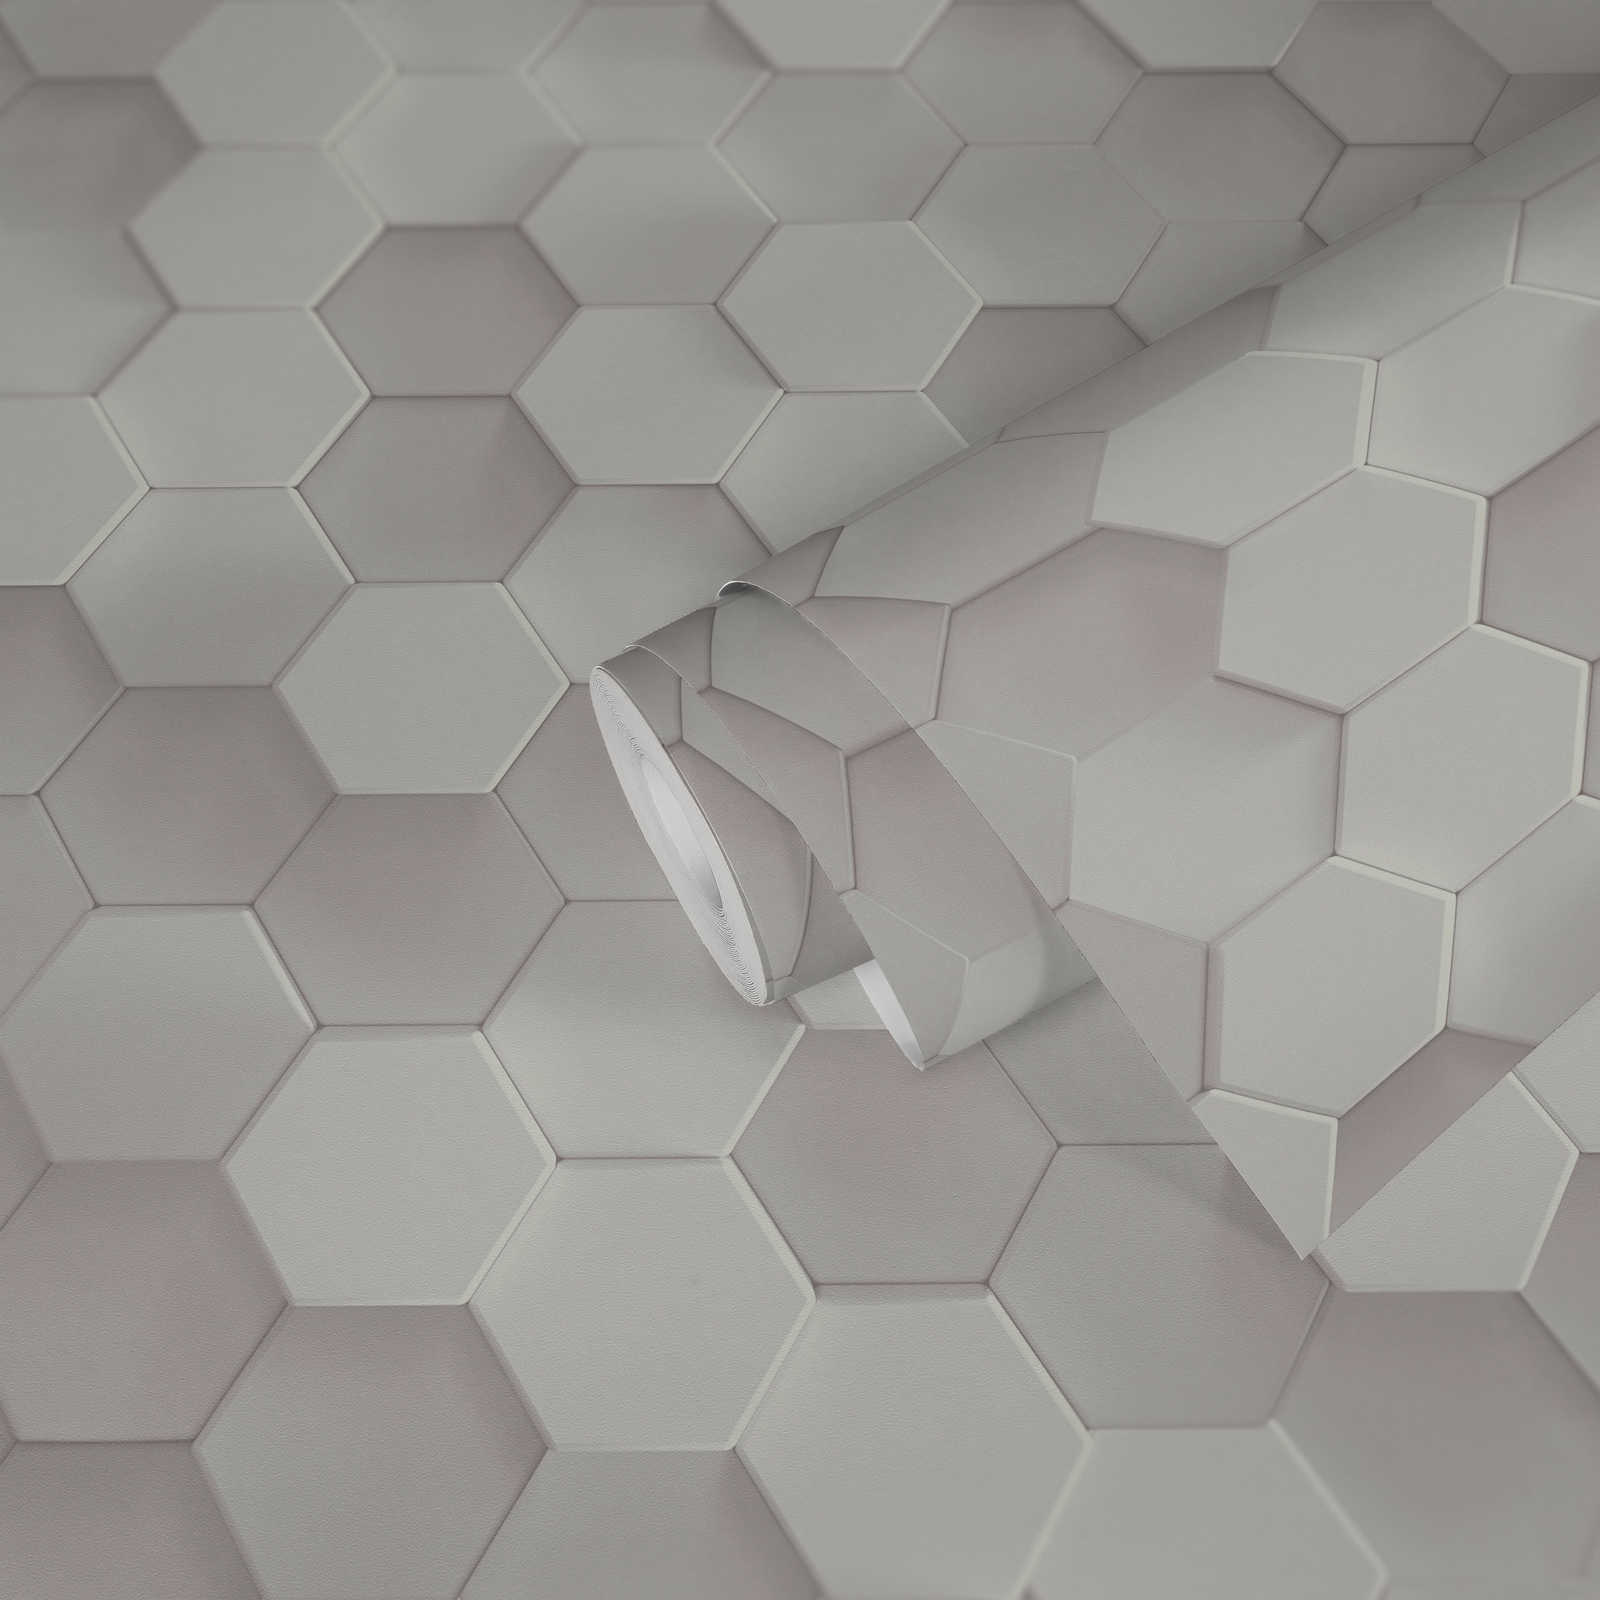             Carta da parati 3D esagonale con motivo grafico a nido d'ape - bianco
        